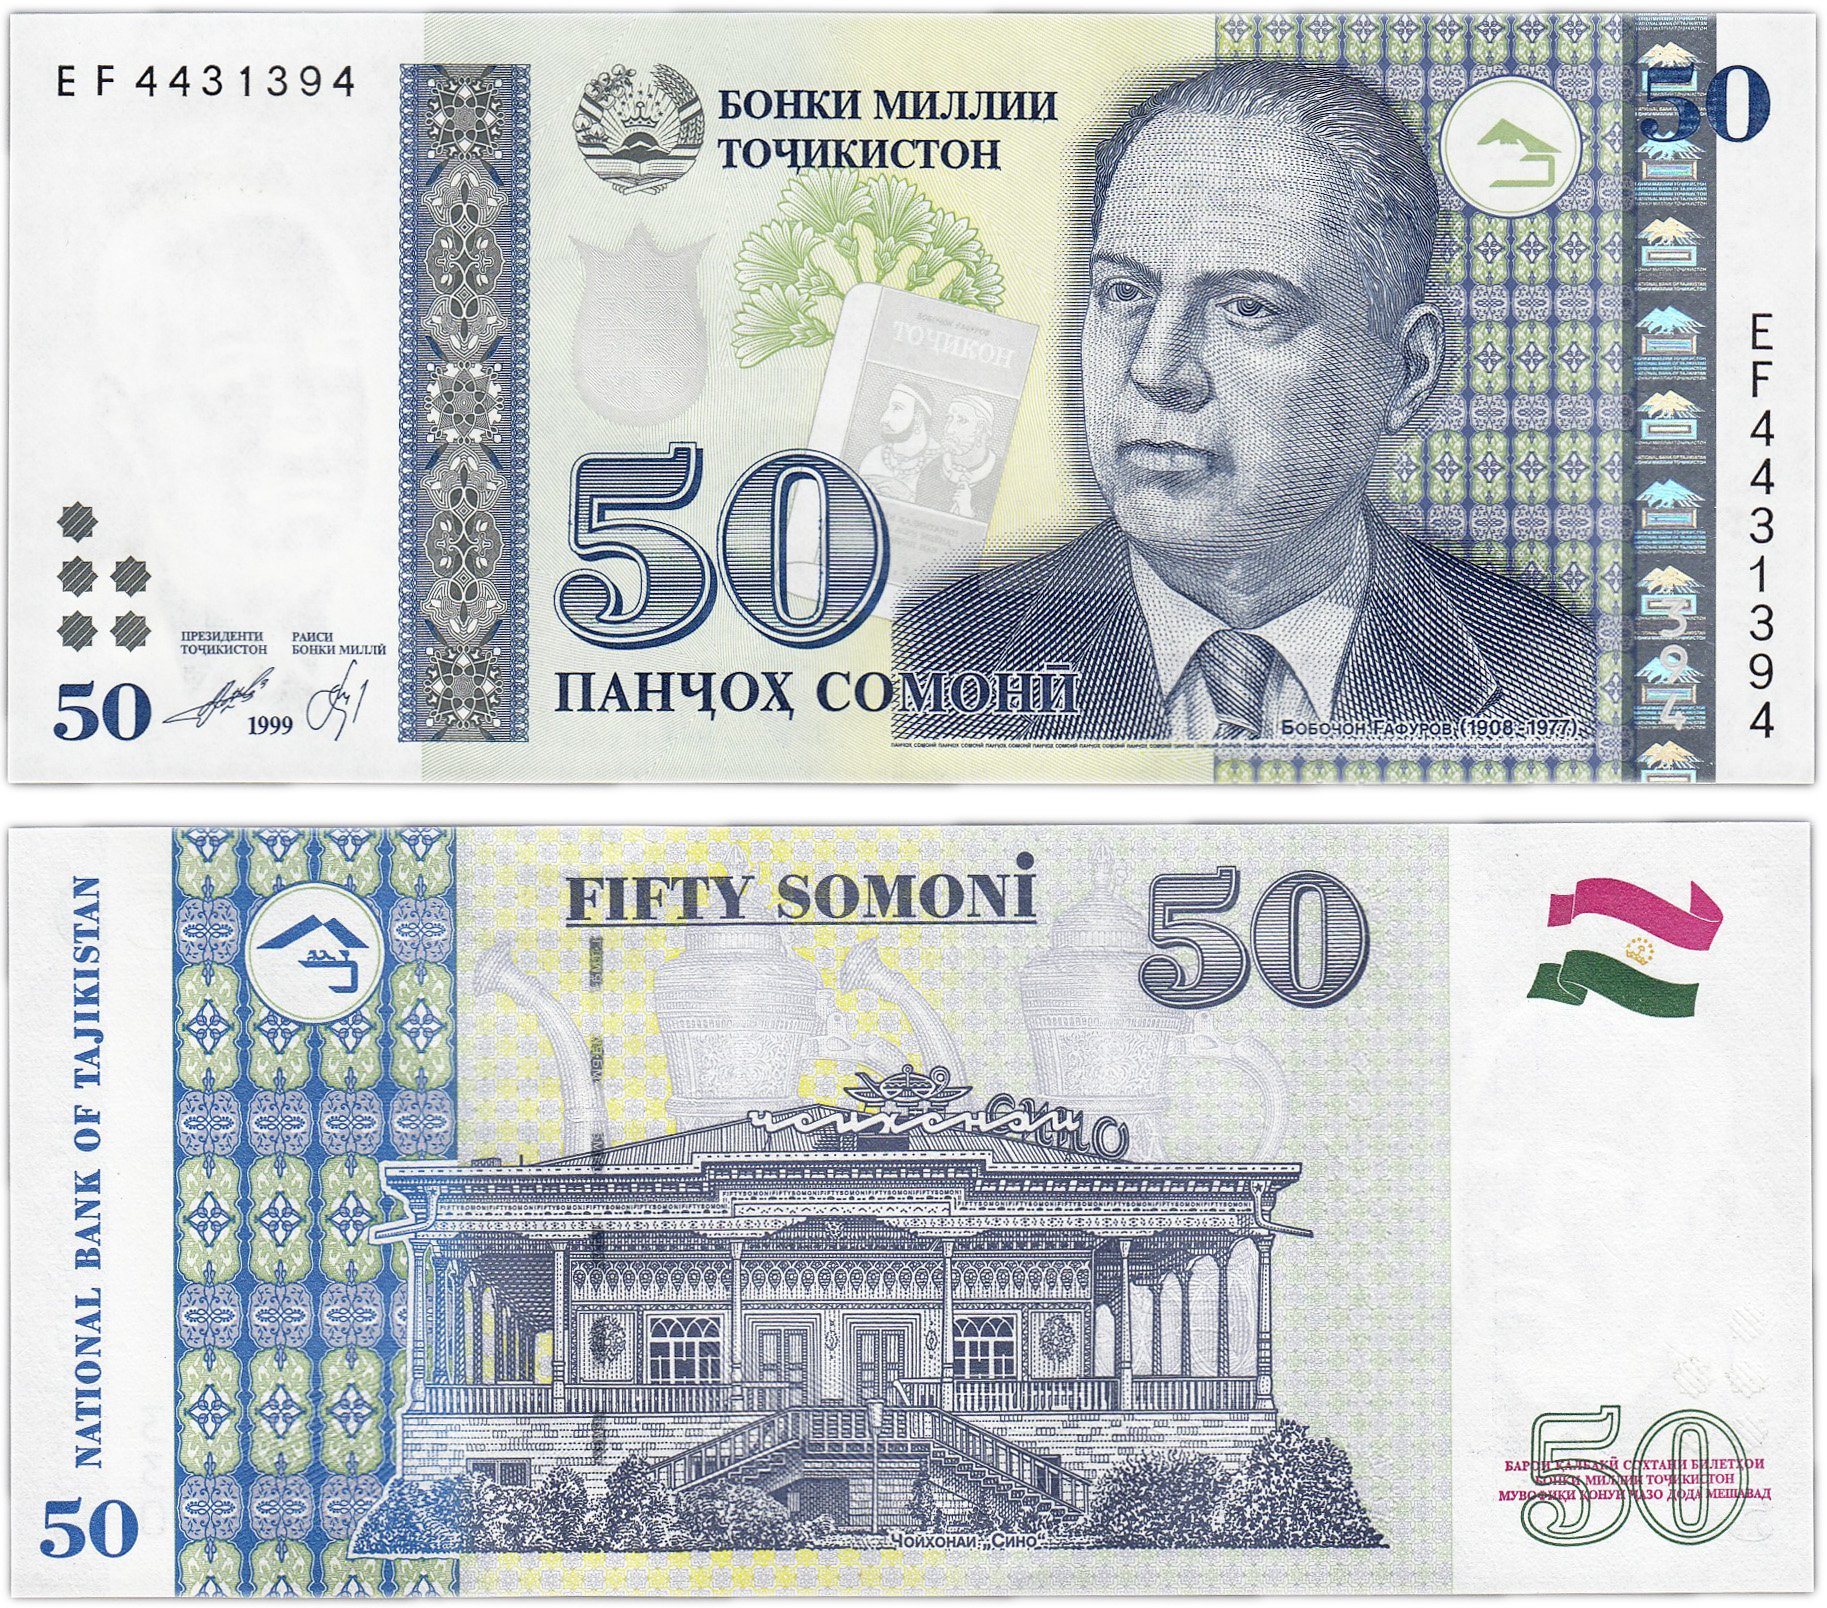 Валюта точикистон. 100 Сомони 1999. Таджикский купюры 500 Сомони. Таджикистан банкнота 20 Сомони 1999. Деньги Таджикистана 500 Сомони.